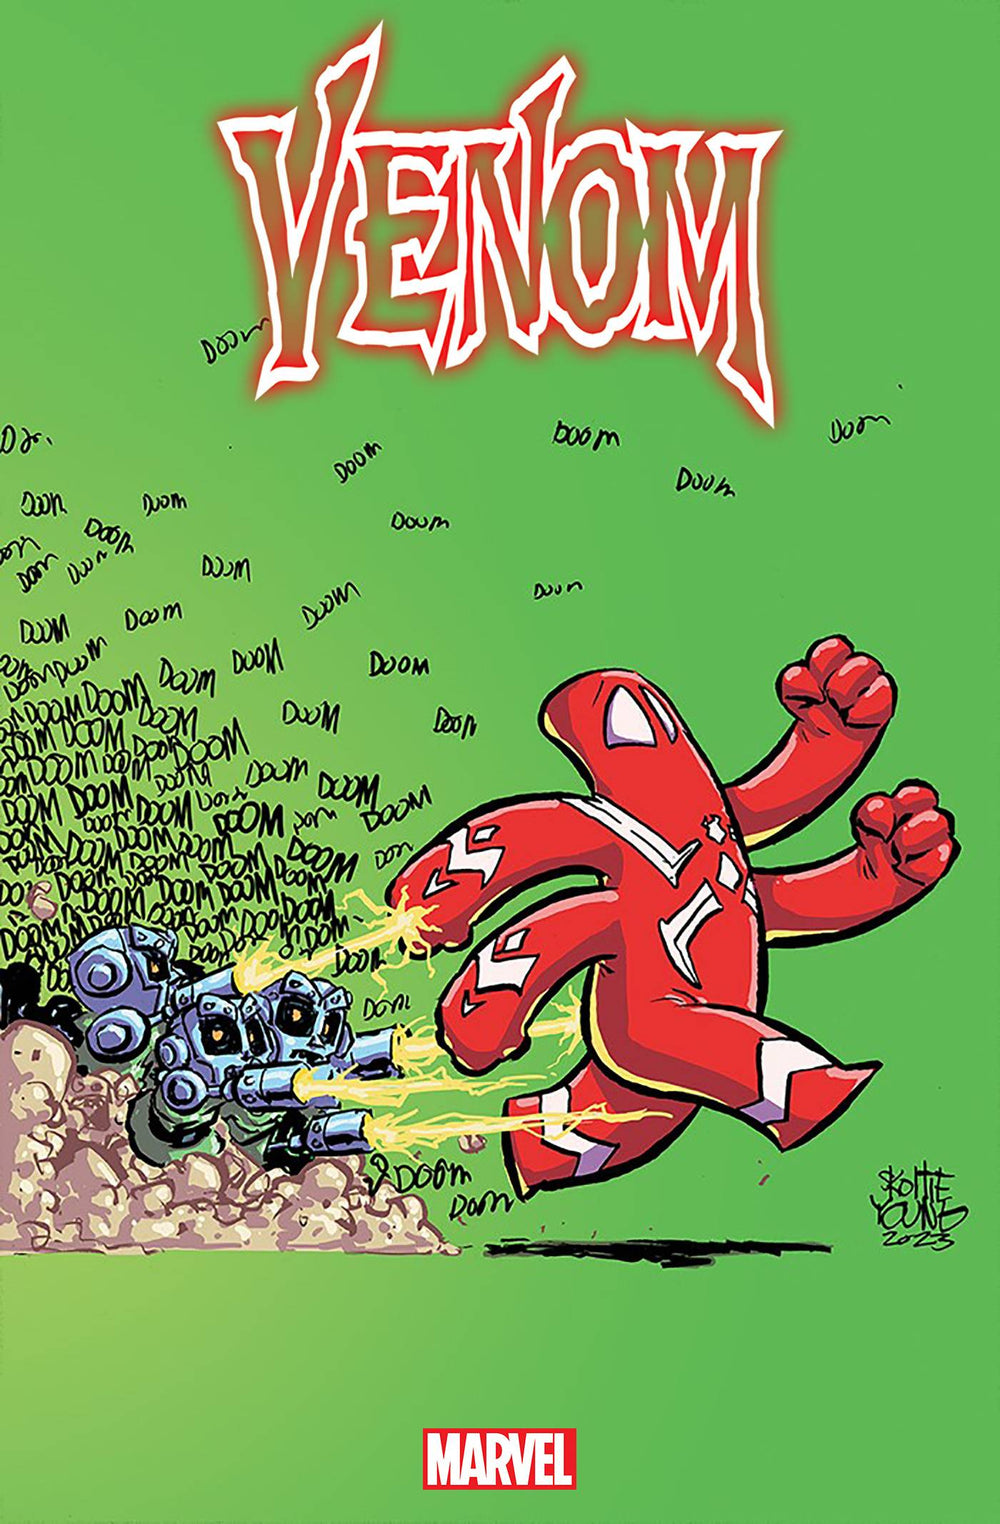 Venom #25 - Skottie Young Variant